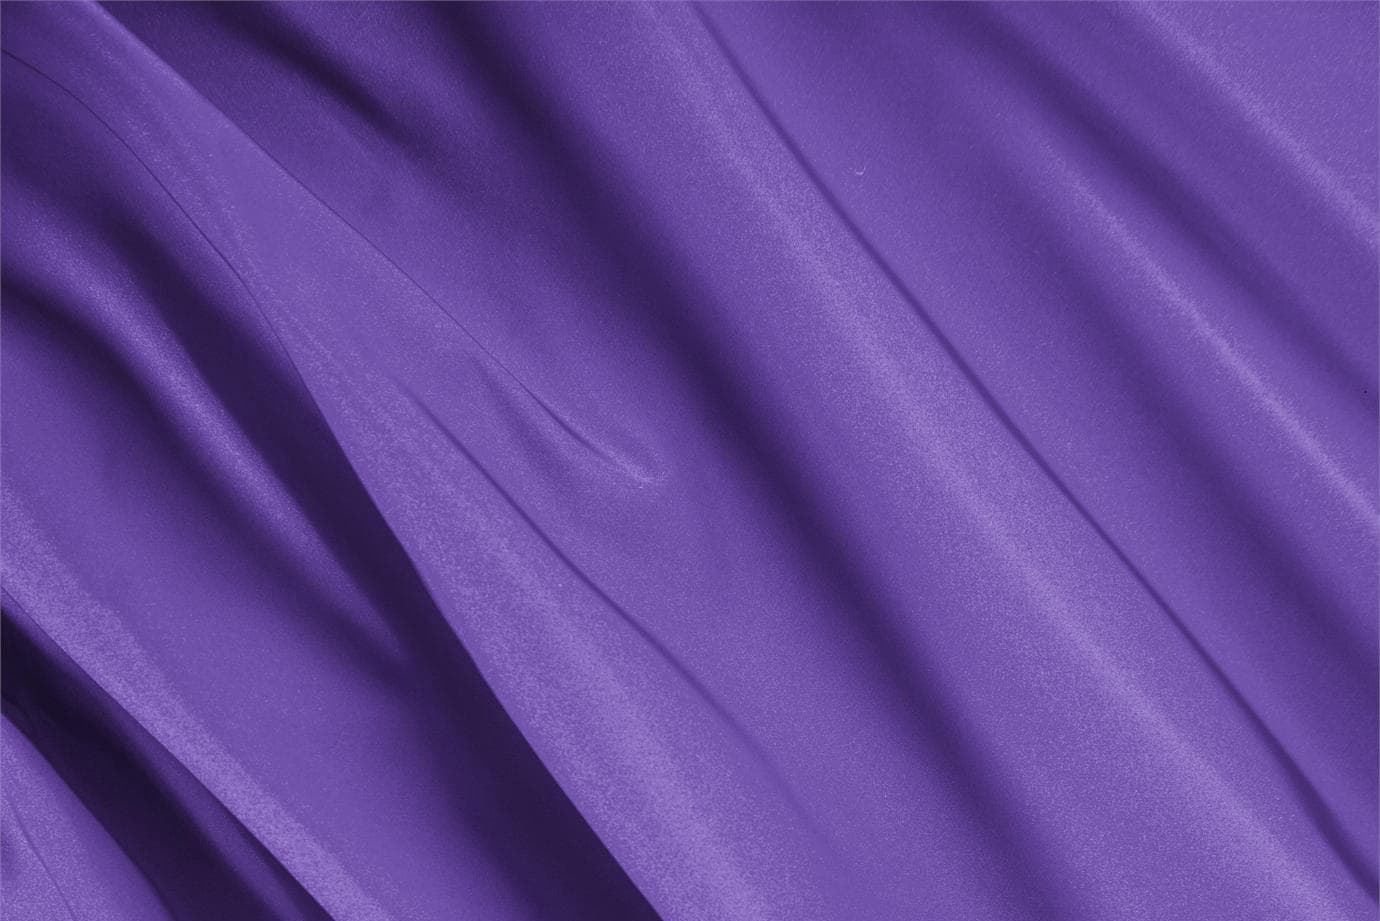 Tessuto Radzemire Viola Iris in Seta per abbigliamento